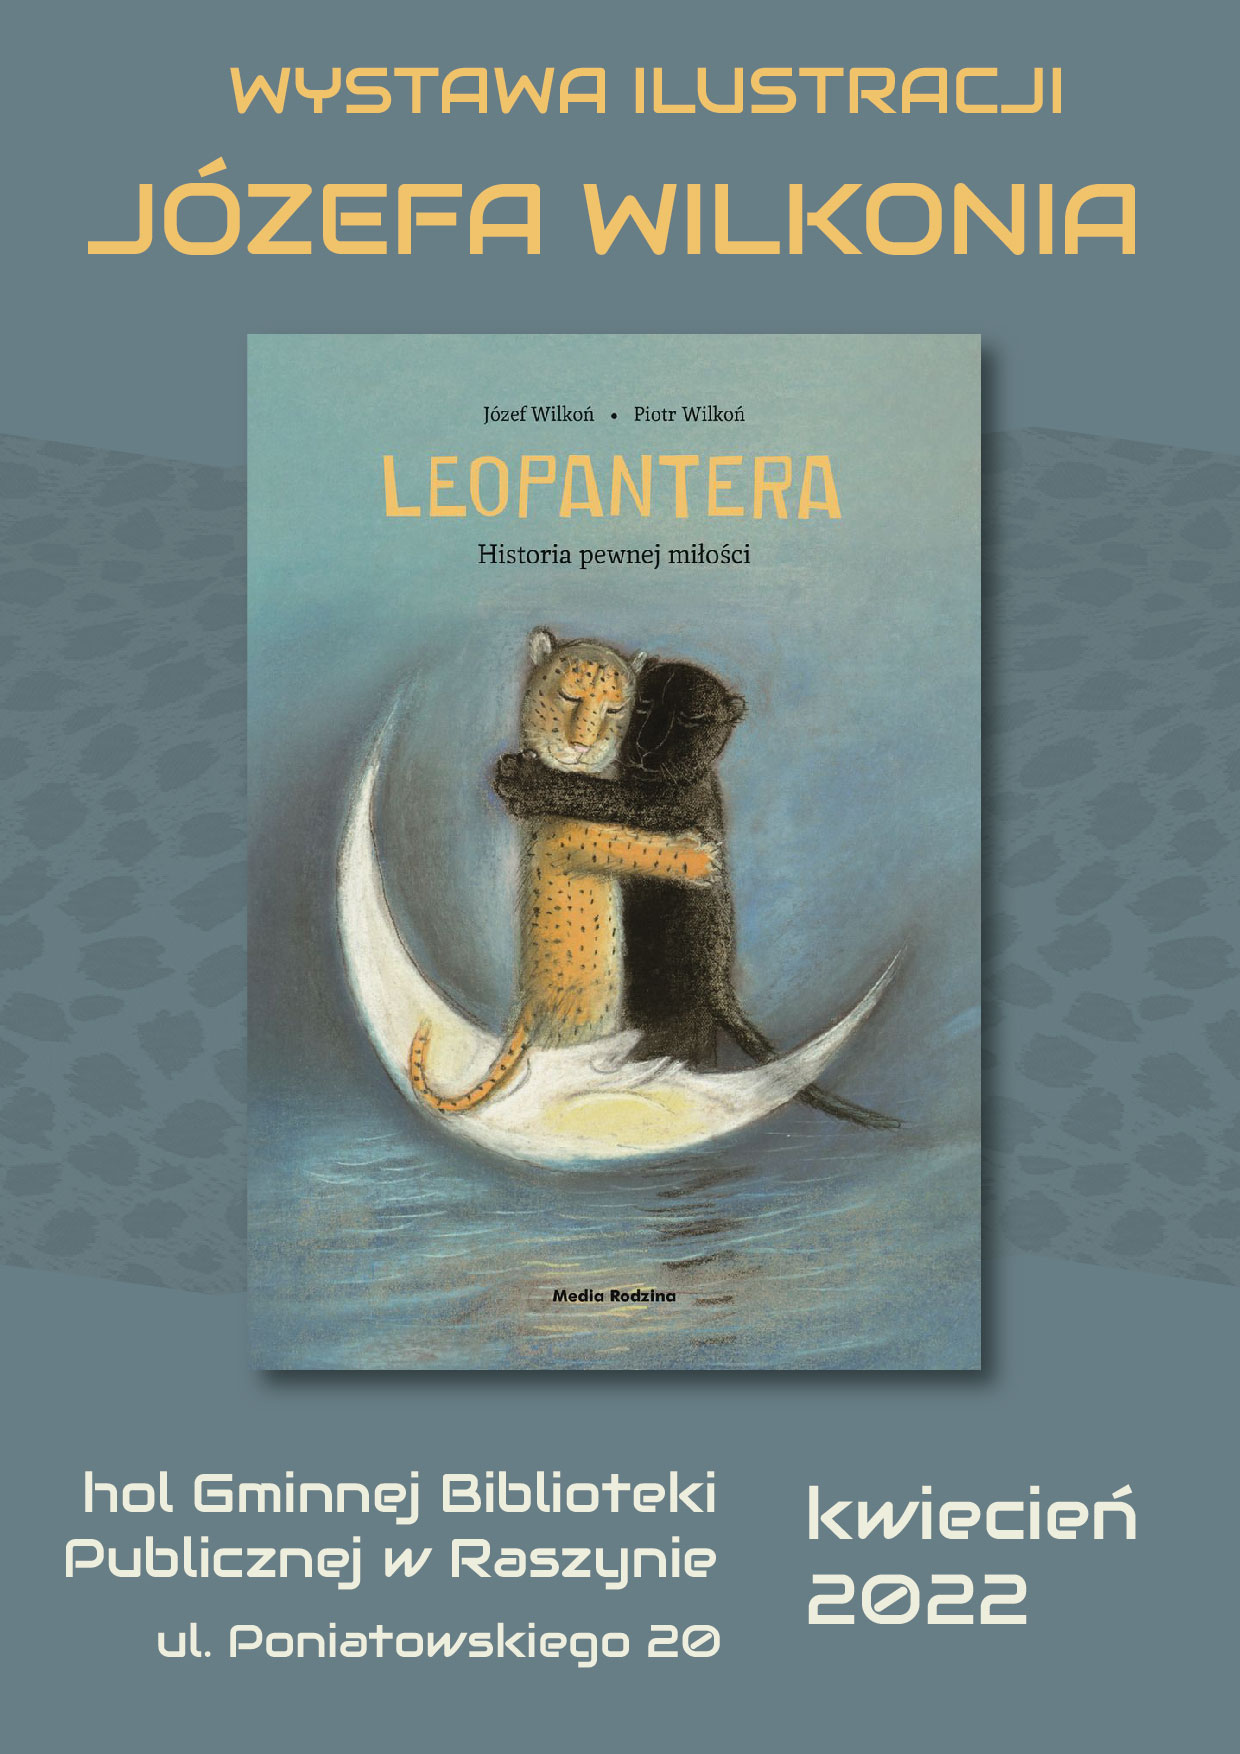 Leopantera: wystawa ilustracji Józefa Wilkonia - plakat